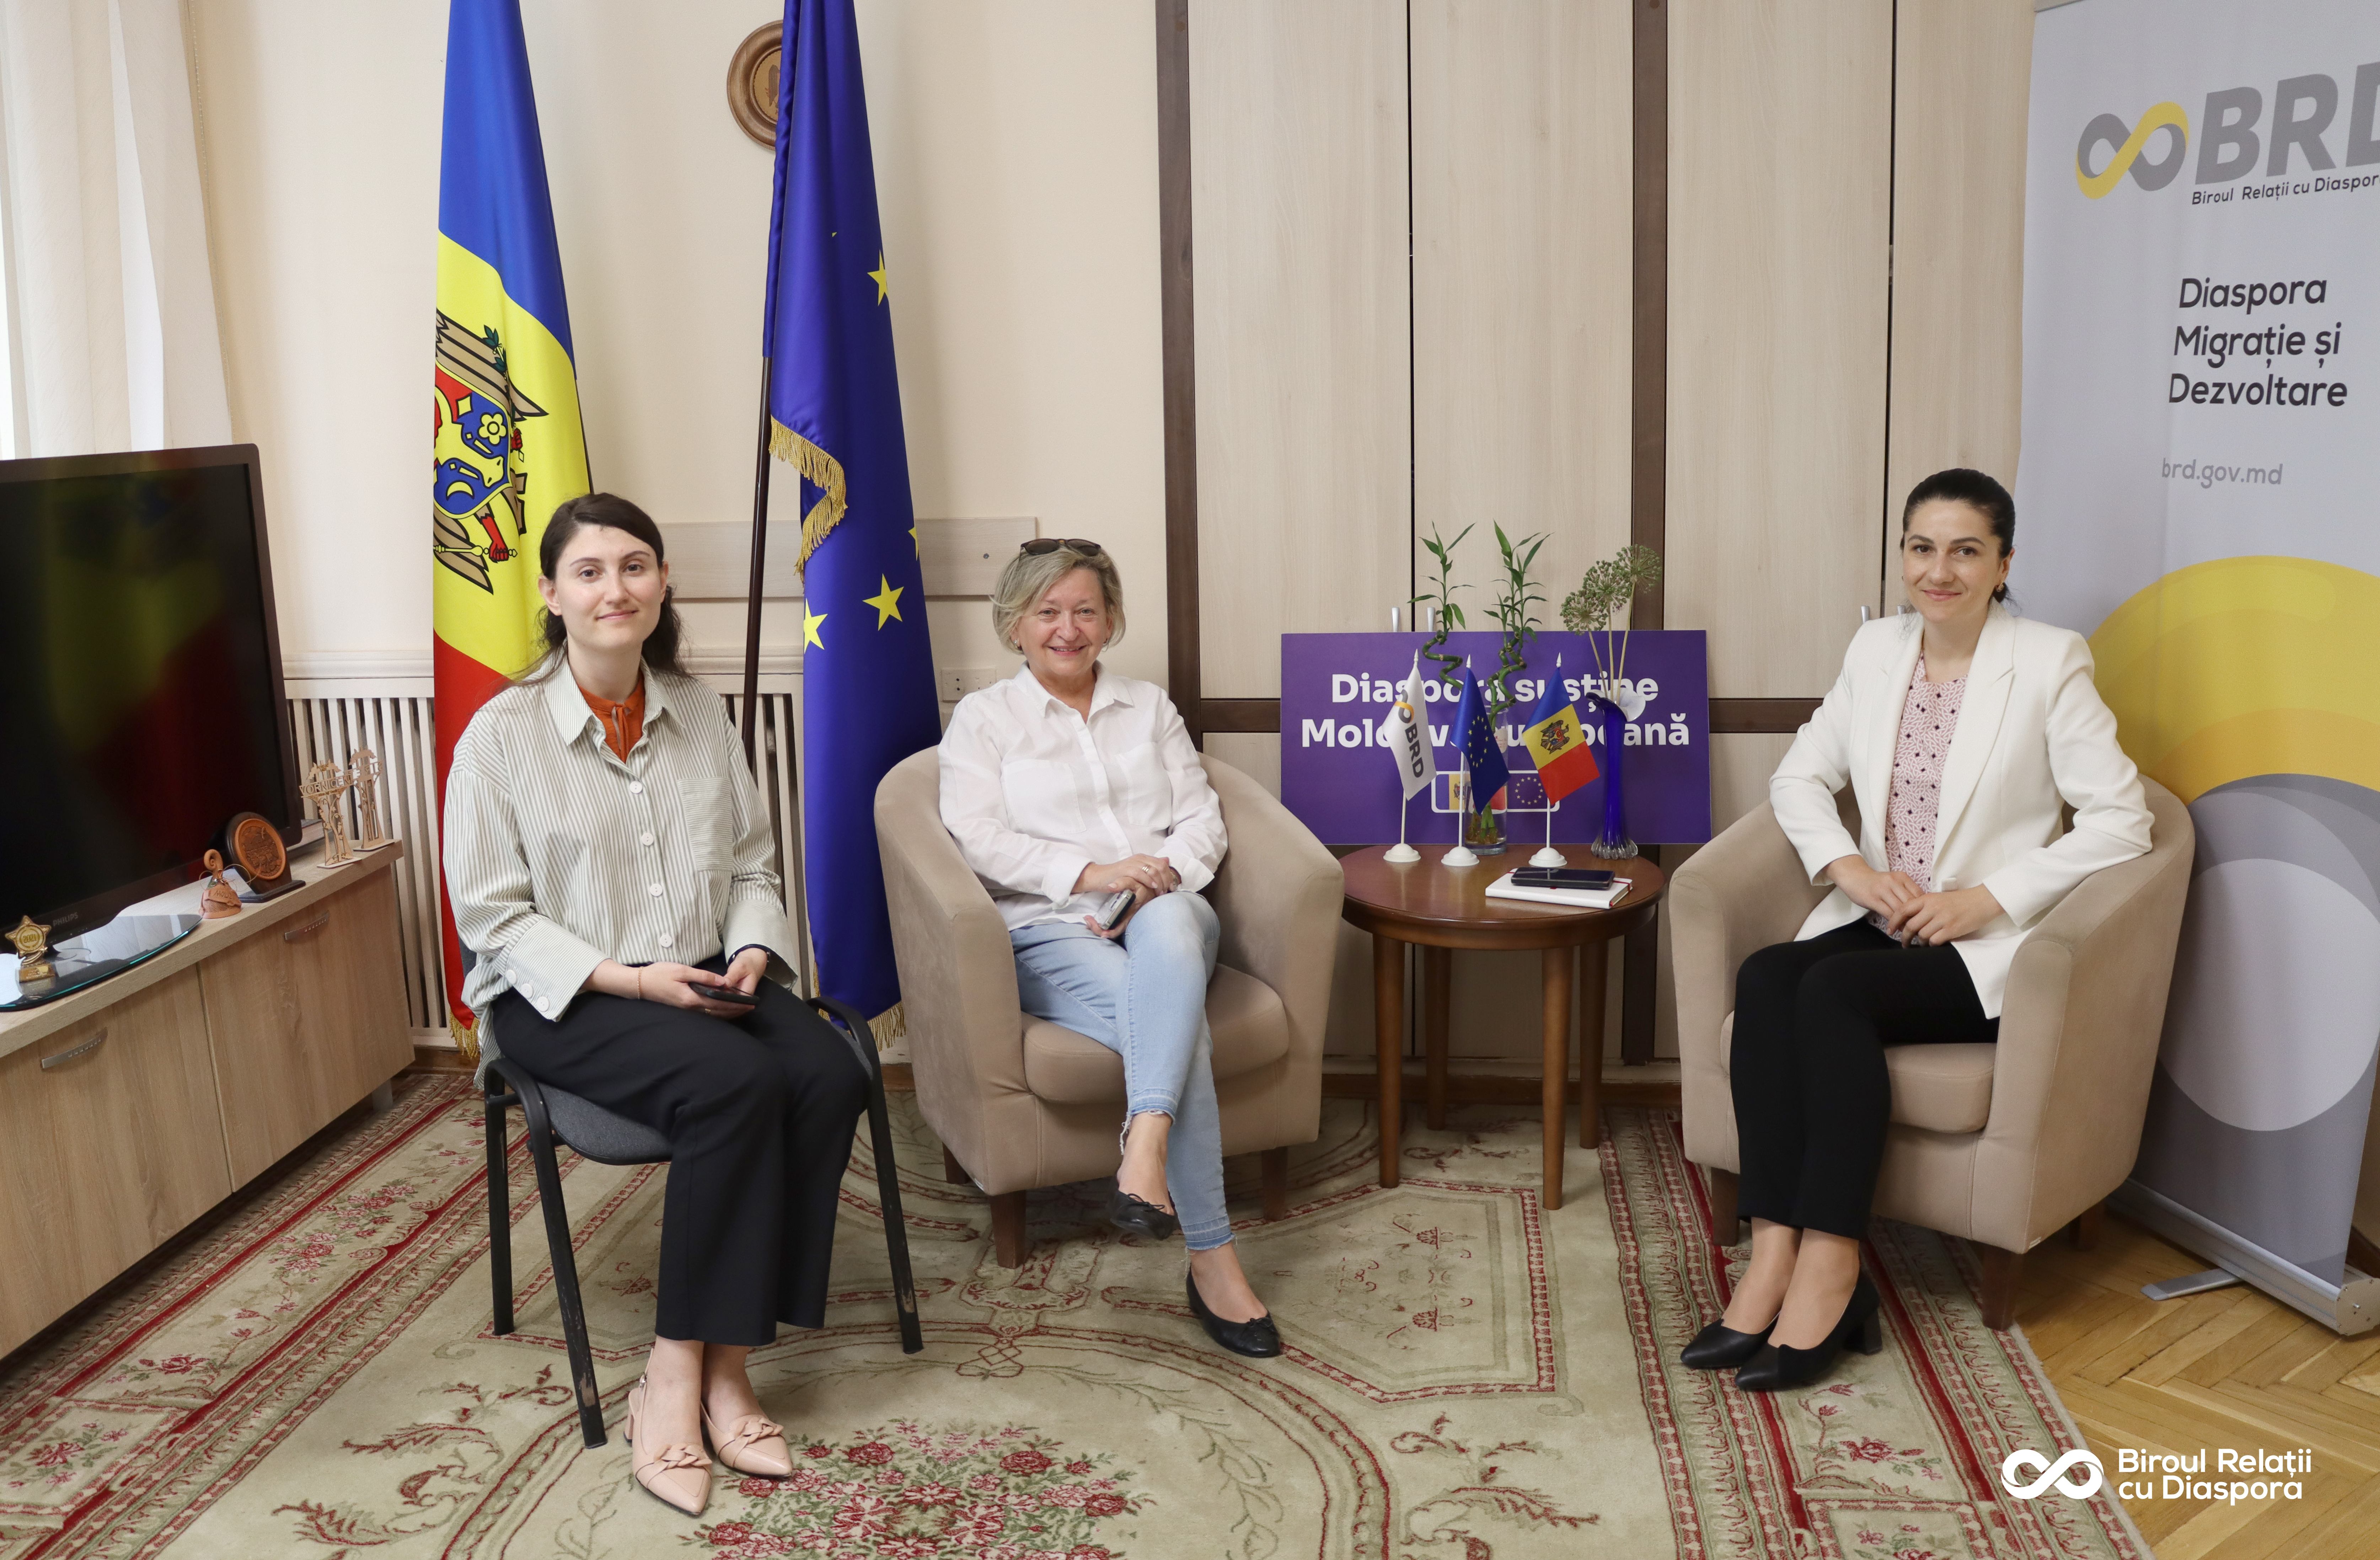 Elena Dragalin, president of the „Moldova AID” Association from the USA had visited the Diaspora Relations Bureau